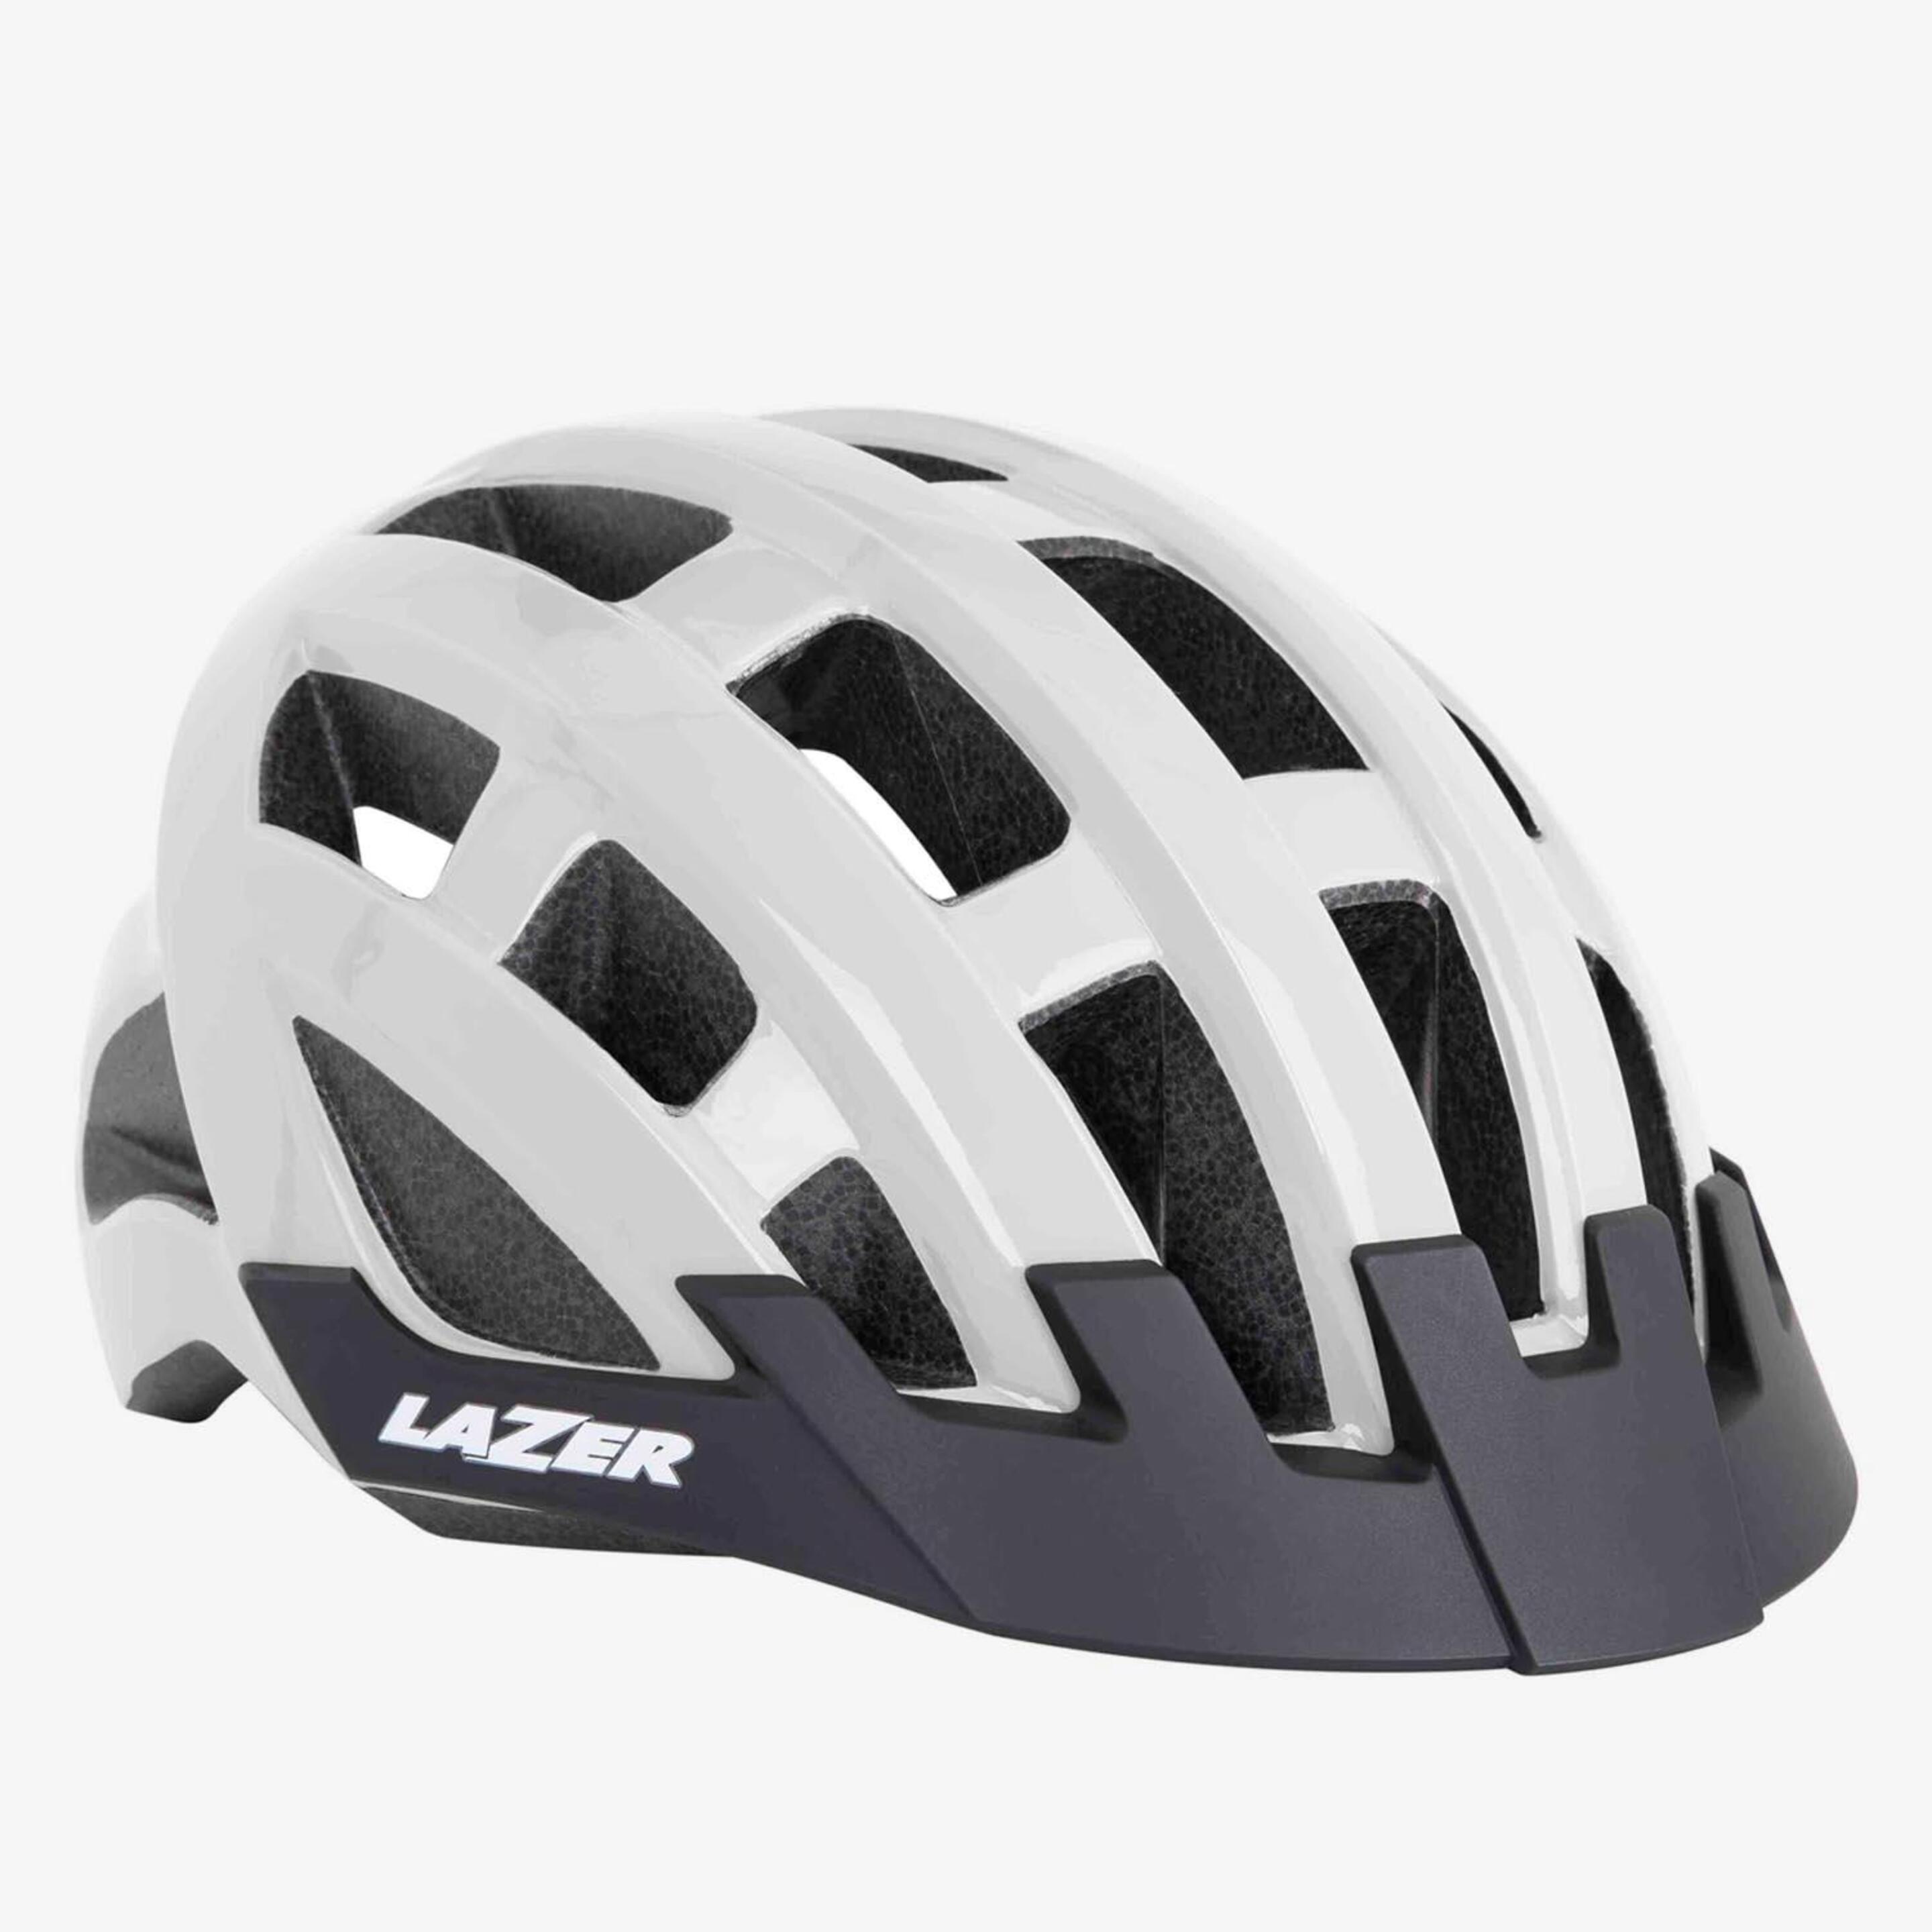 Lazer Compact - Blanco - Casco Ciclismo  MKP